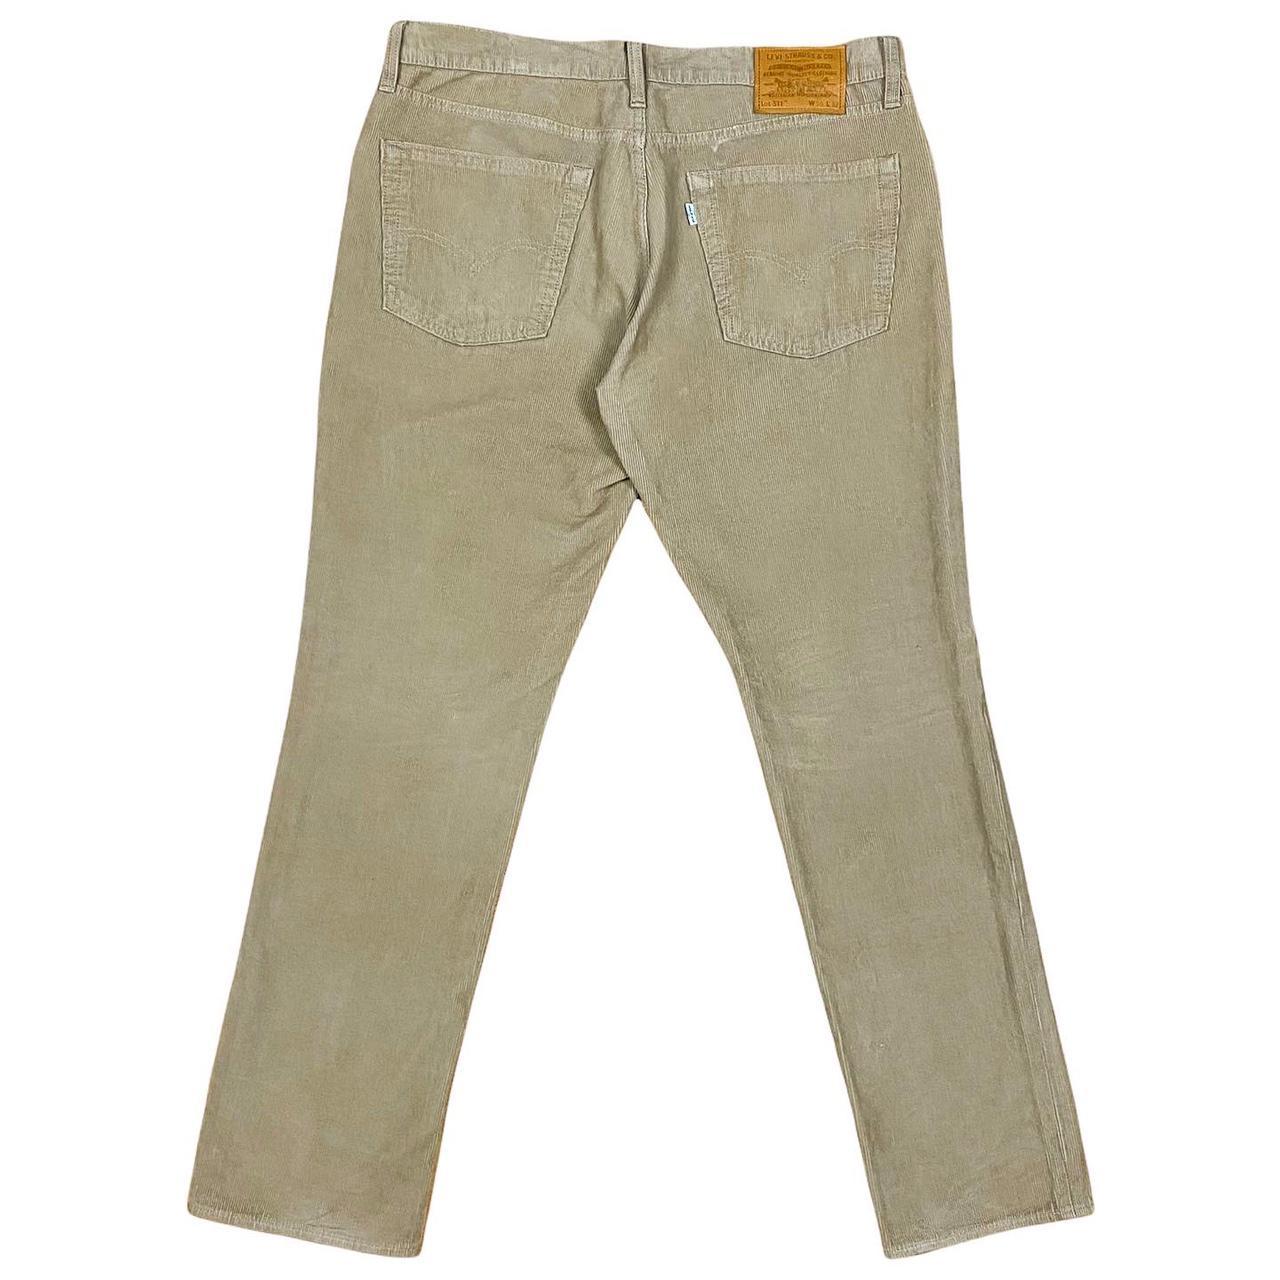 Vintage Levi’s 511 Corduroy Trousers/Jeans in... - Depop